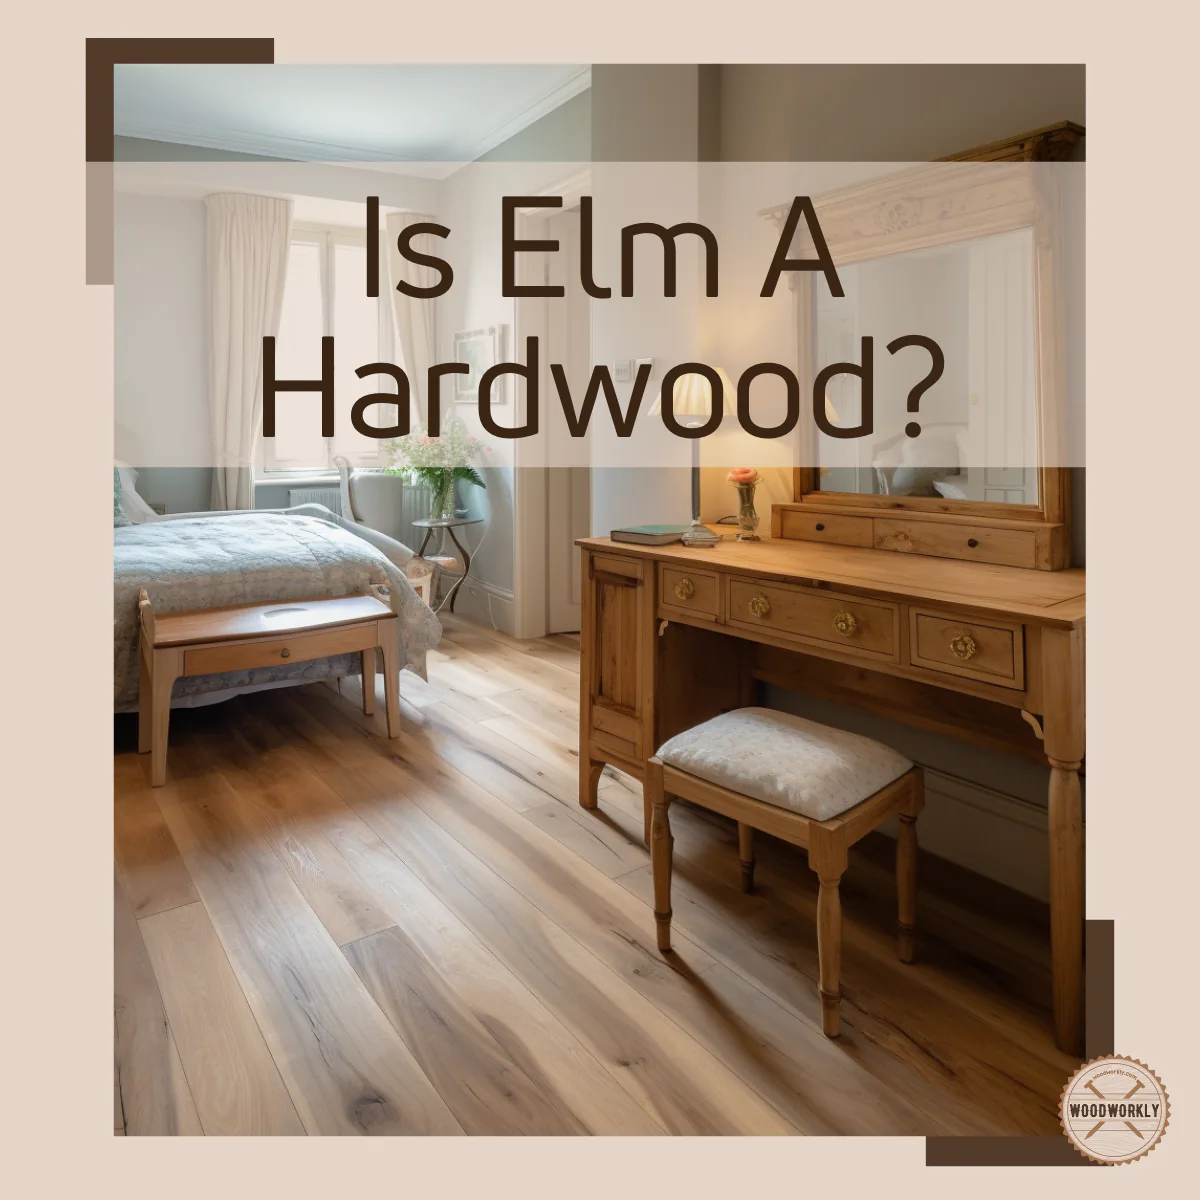 is Elm a hardwood